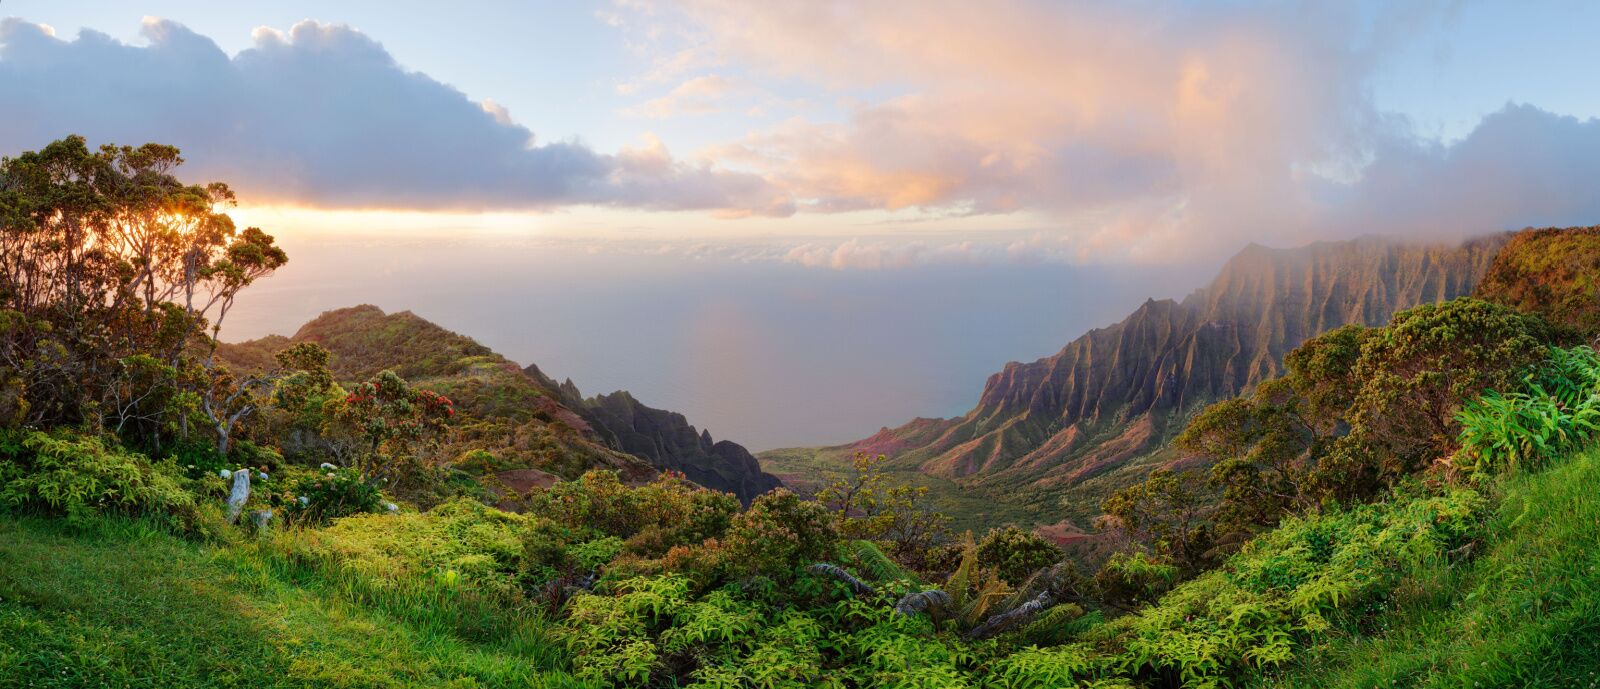 Kalalau lookout panorama on Hawaii island Kauai. Beautiful color sunset with rainy clouds. View of the Kalalau Valley and Na Pali coast